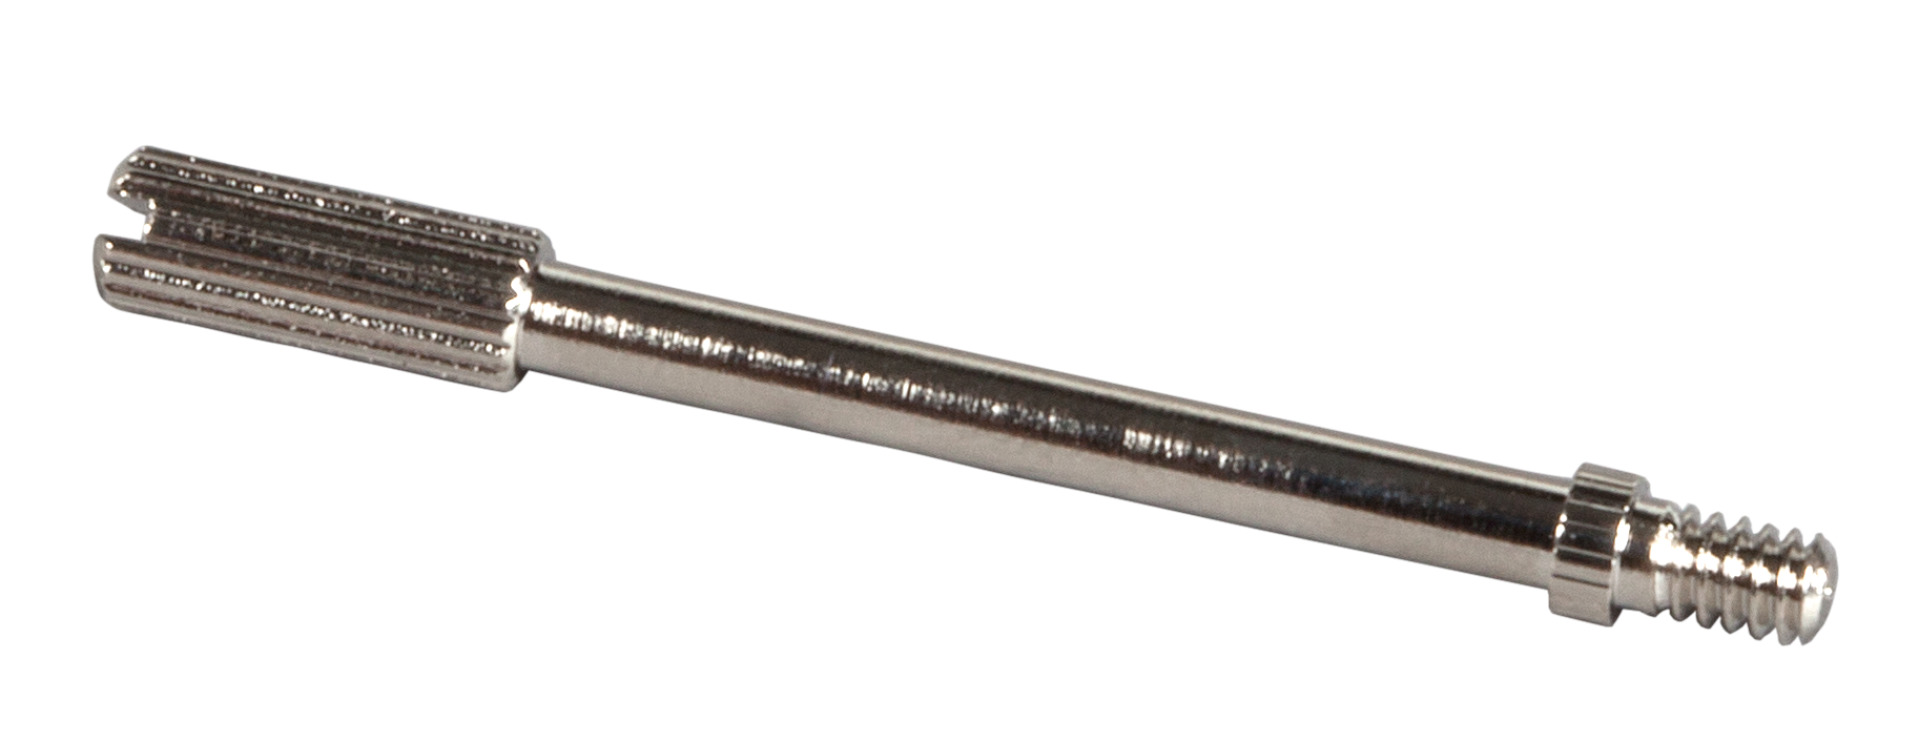 Thumb screw 43mm f. EDH/UNC, with slit